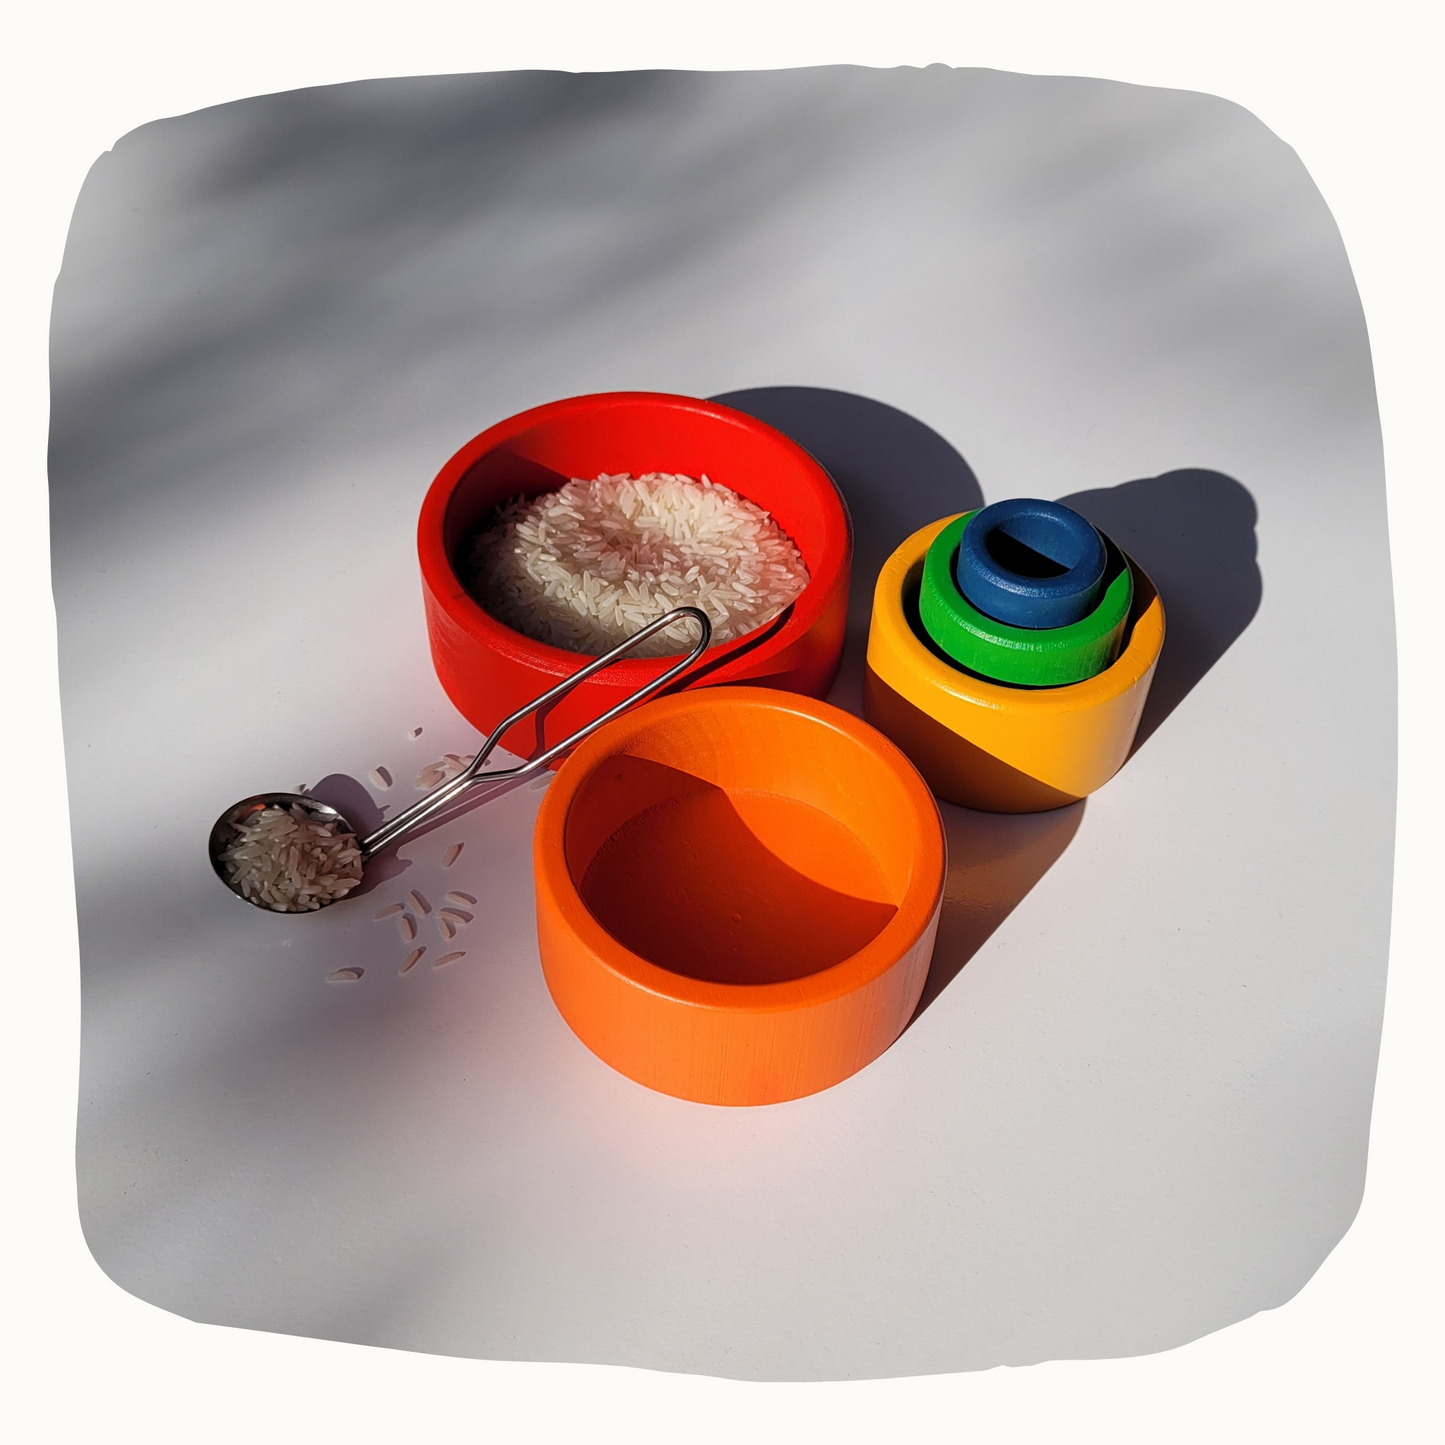 2nd's item Rainbow Nesting Bowls